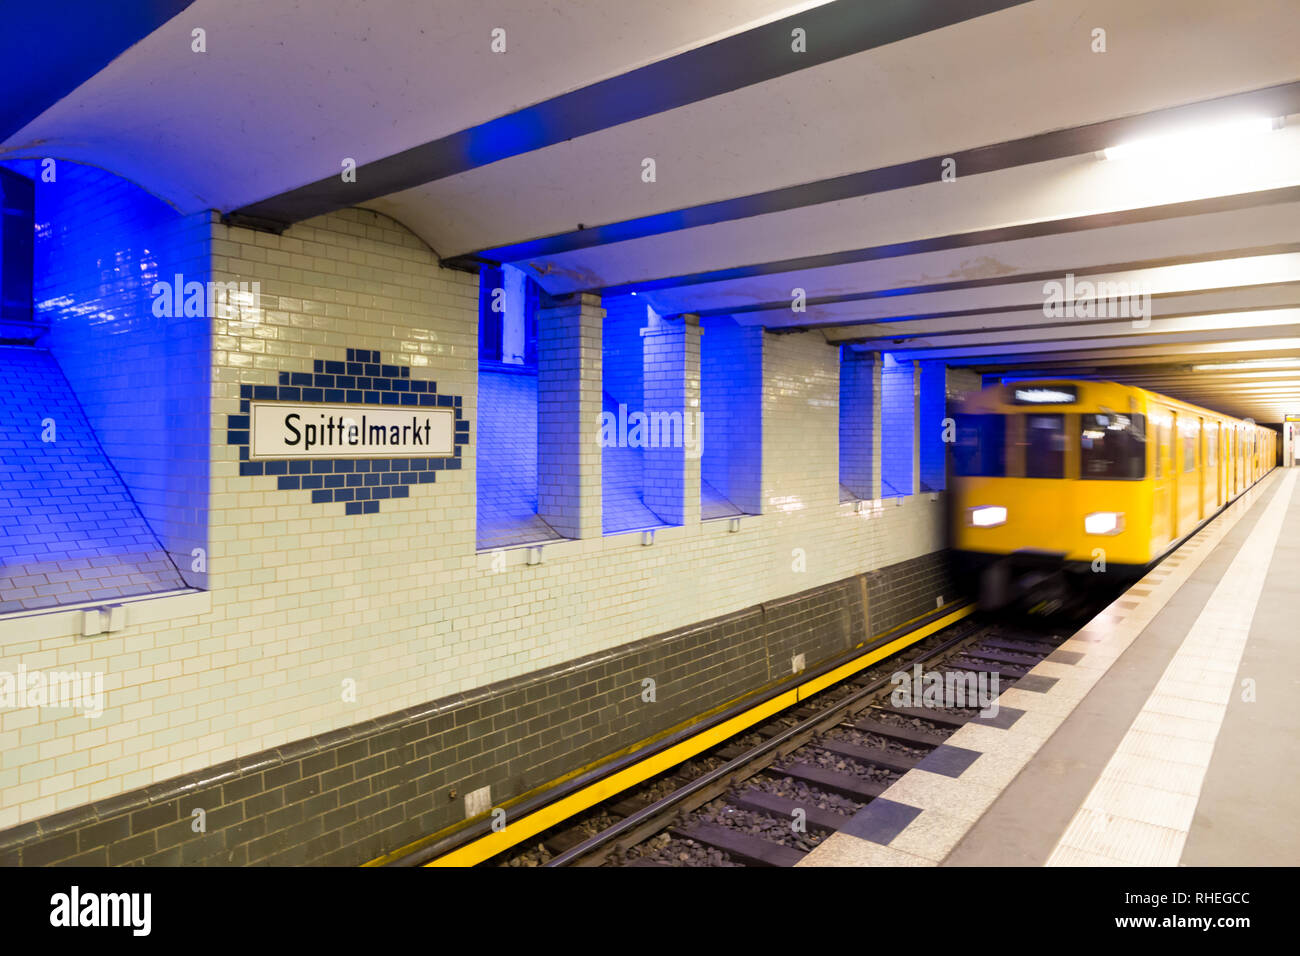 Berlin, Germany - December 18, 2017: Spittelmarkt station in Berlin subway located near to the Spree river Stock Photo